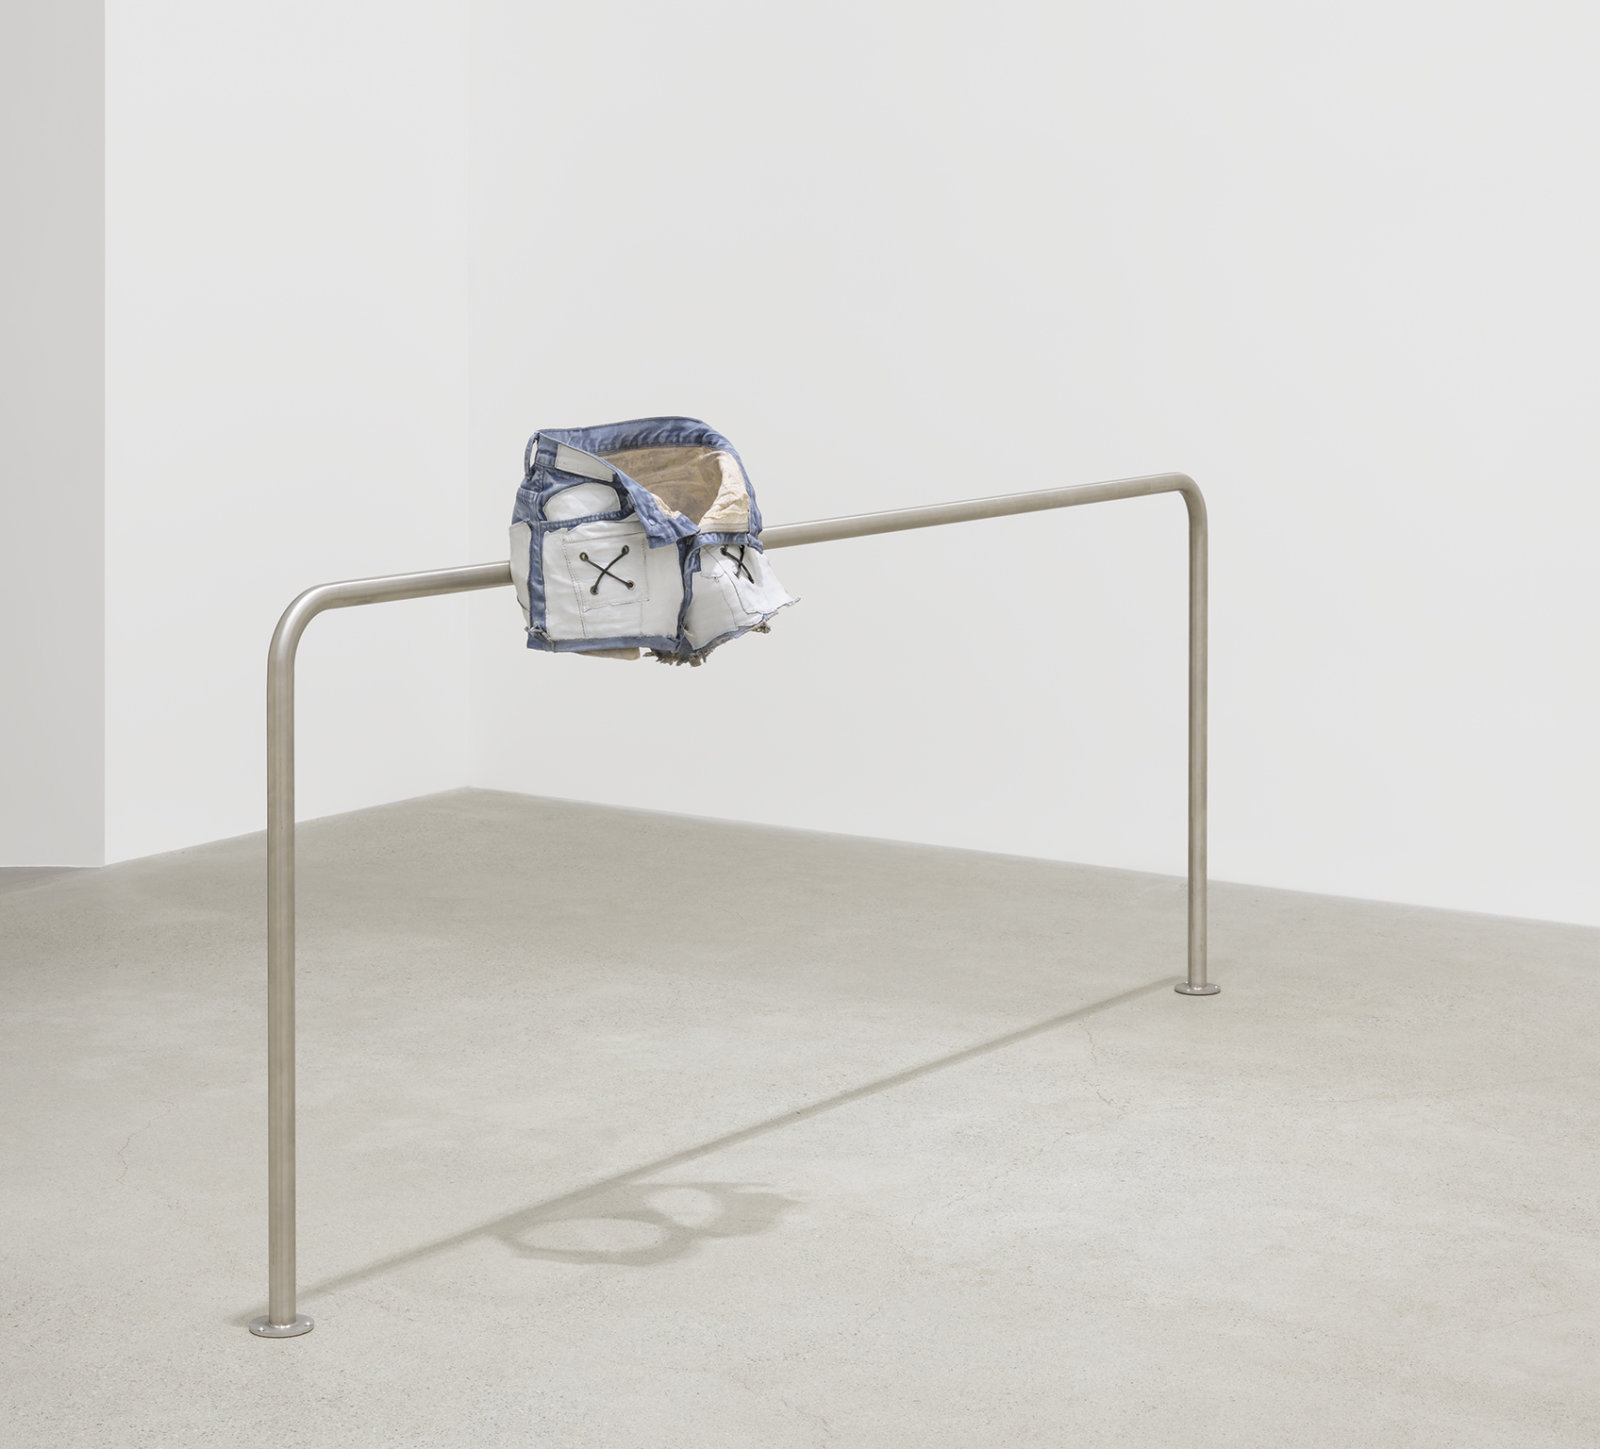 Valérie Blass, L’homme réparé, 2019, stainless steel, denim shorts, epoxy resin, acrylic paint, 41 x 89 x 12 in. (104 x 226 x 31 cm)